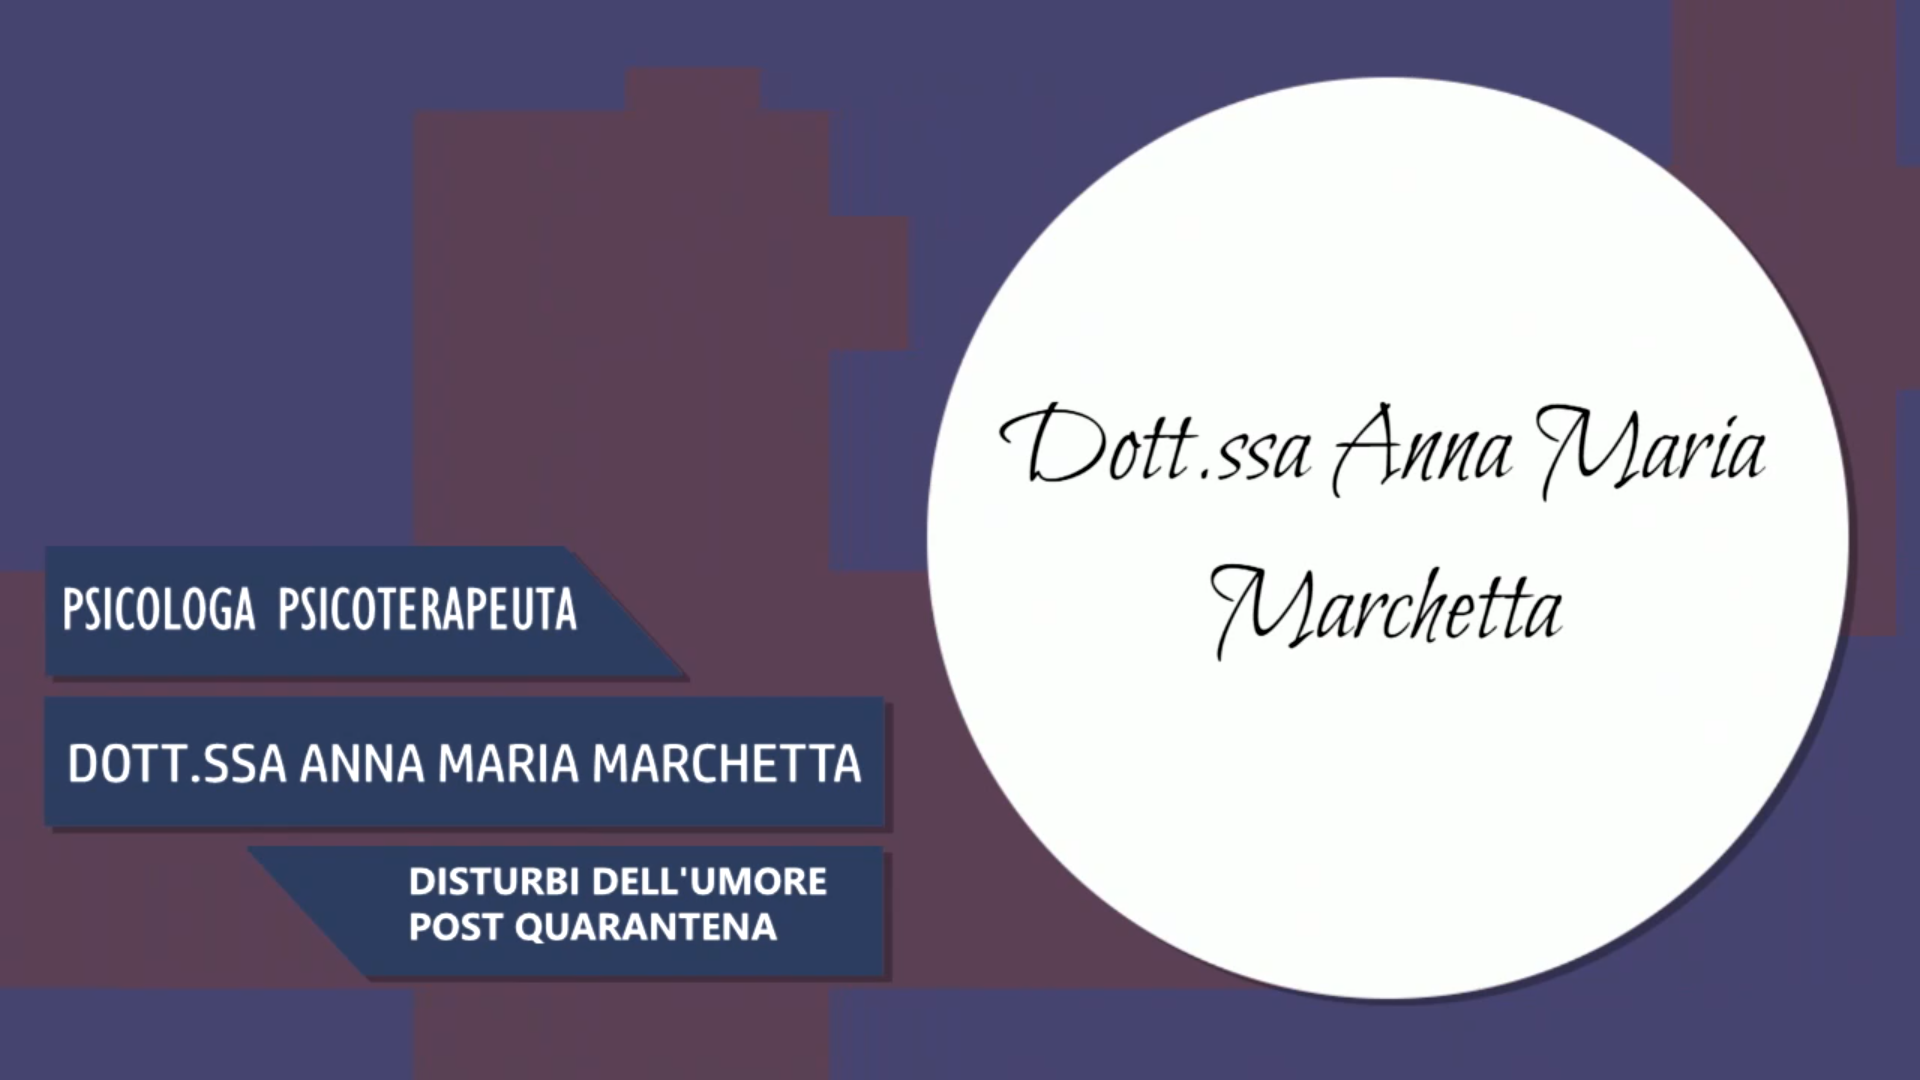 Intervista alla Dott.ssa Anna Maria Marchetta – Disturbi dell’umore post quarantena